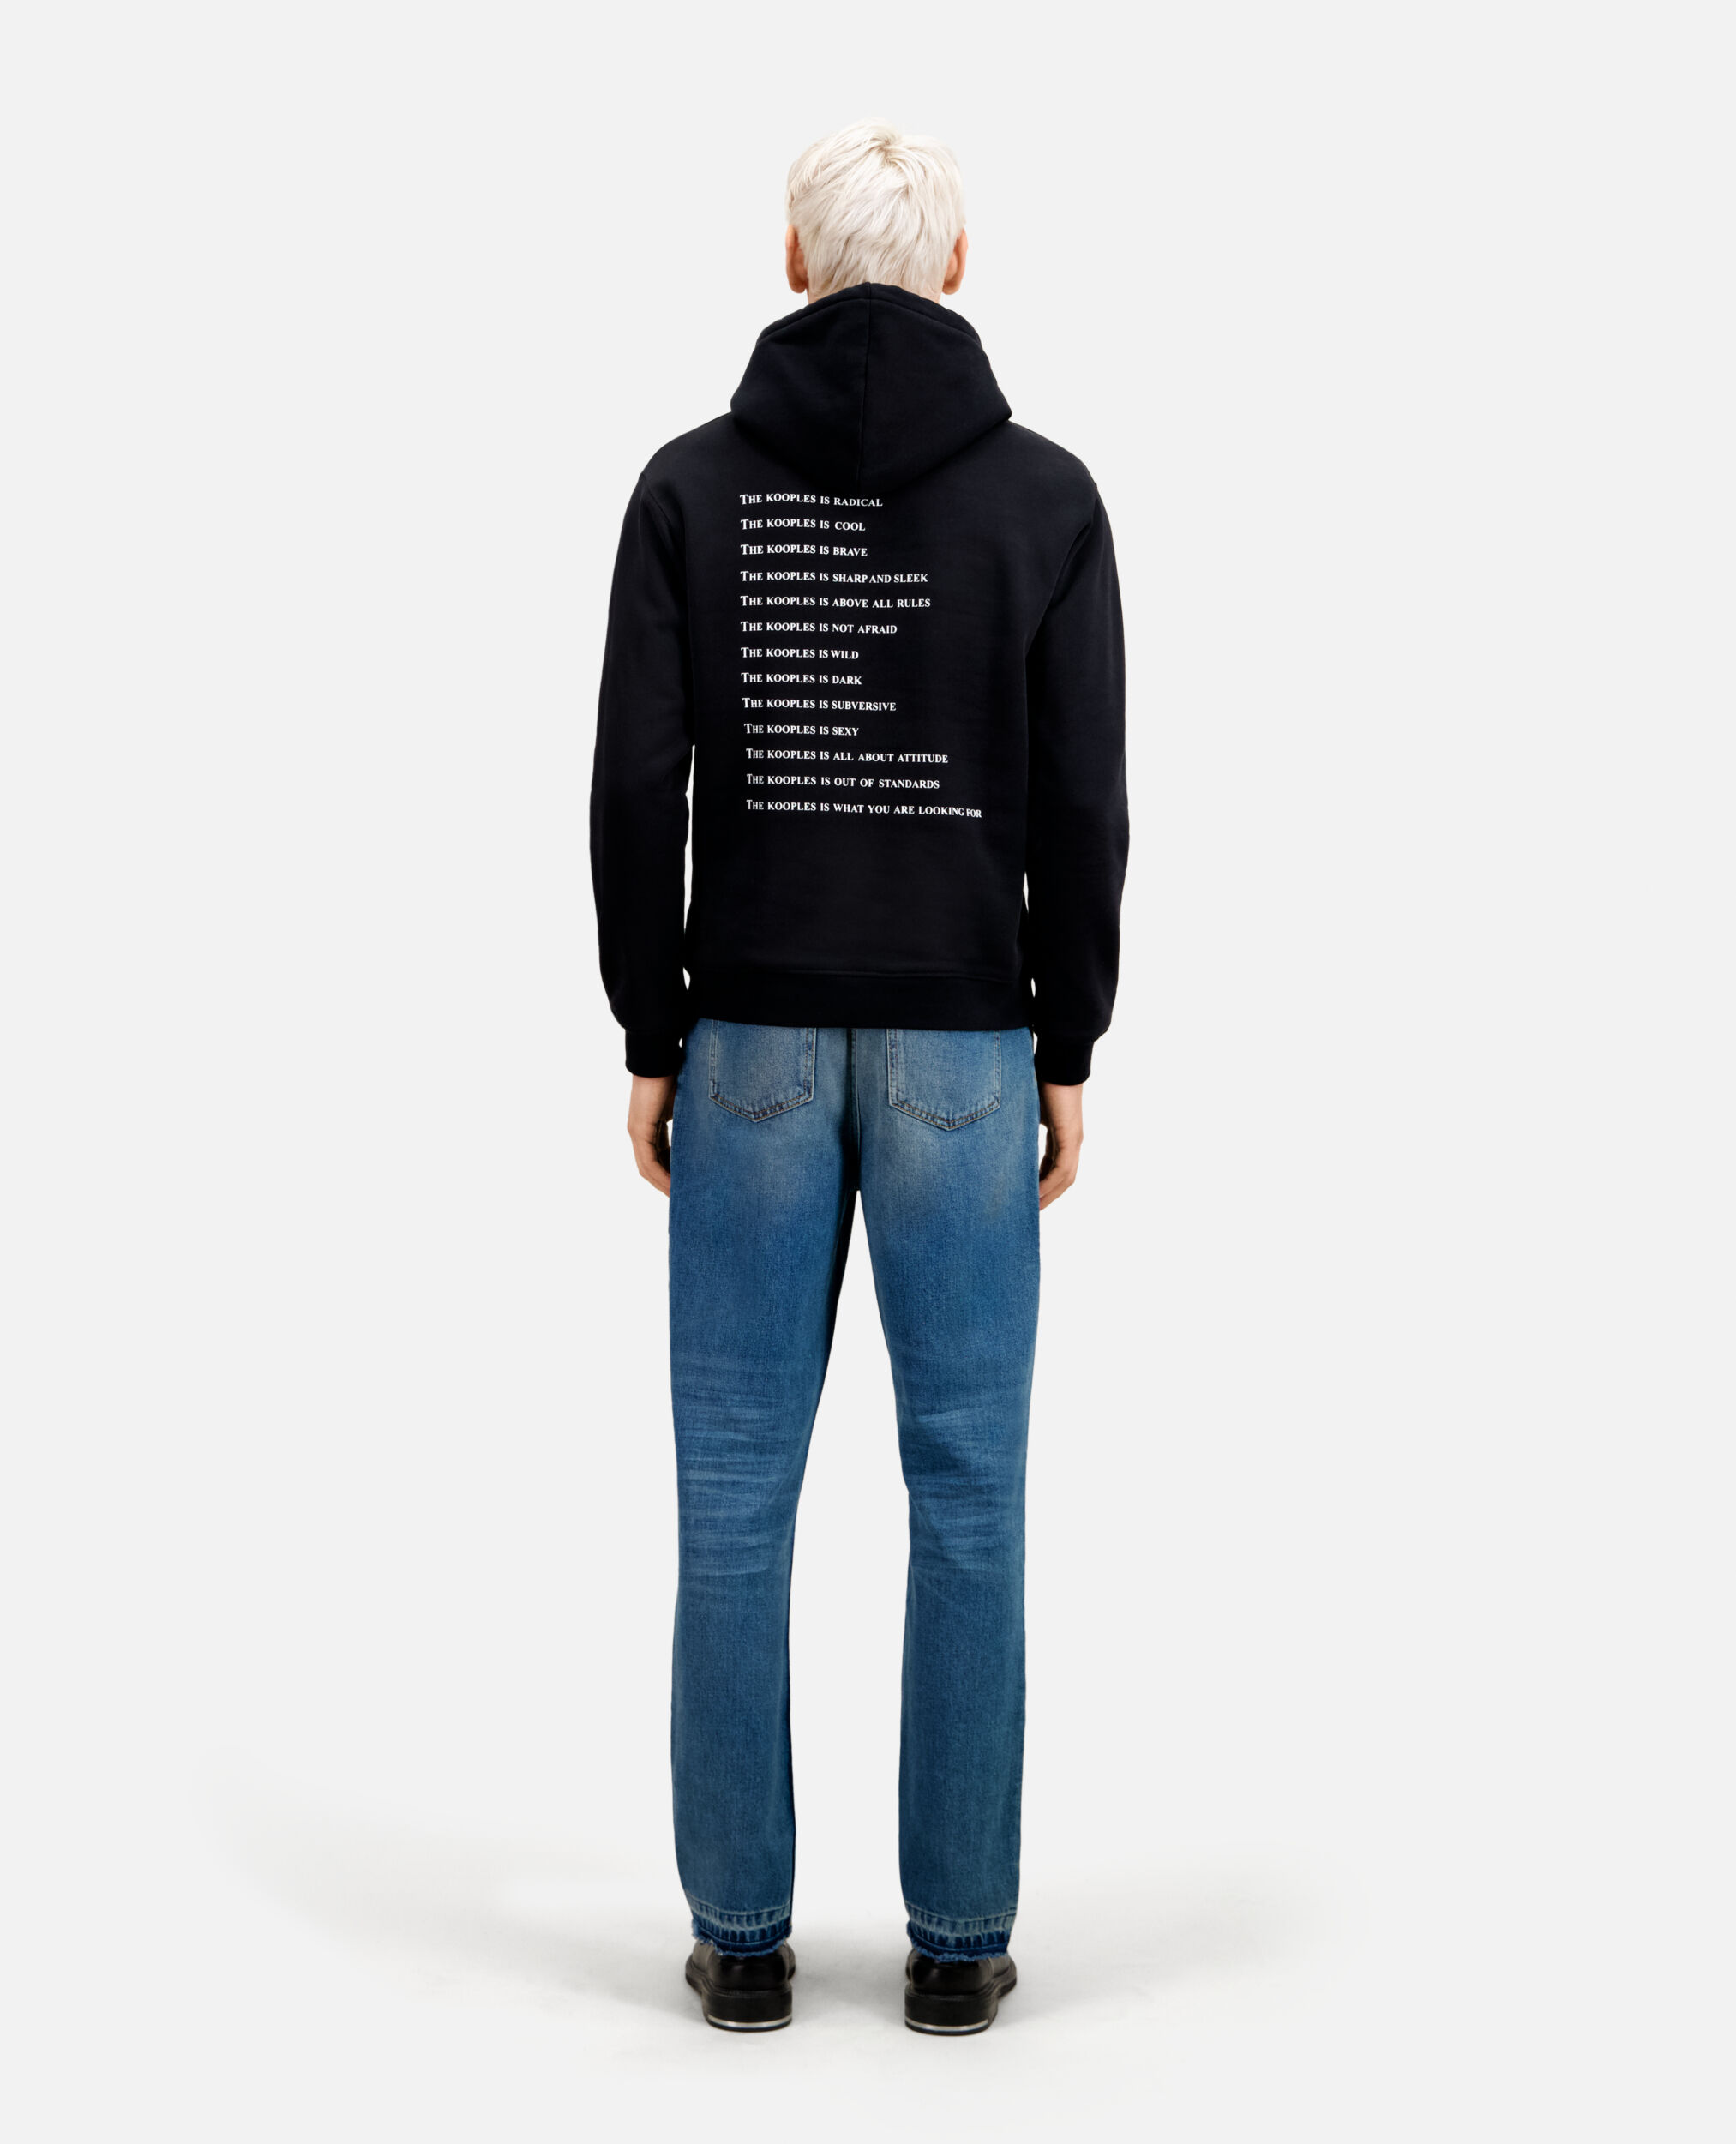 Men's Black sweatshirt with What is screen print, BLACK, hi-res image number null